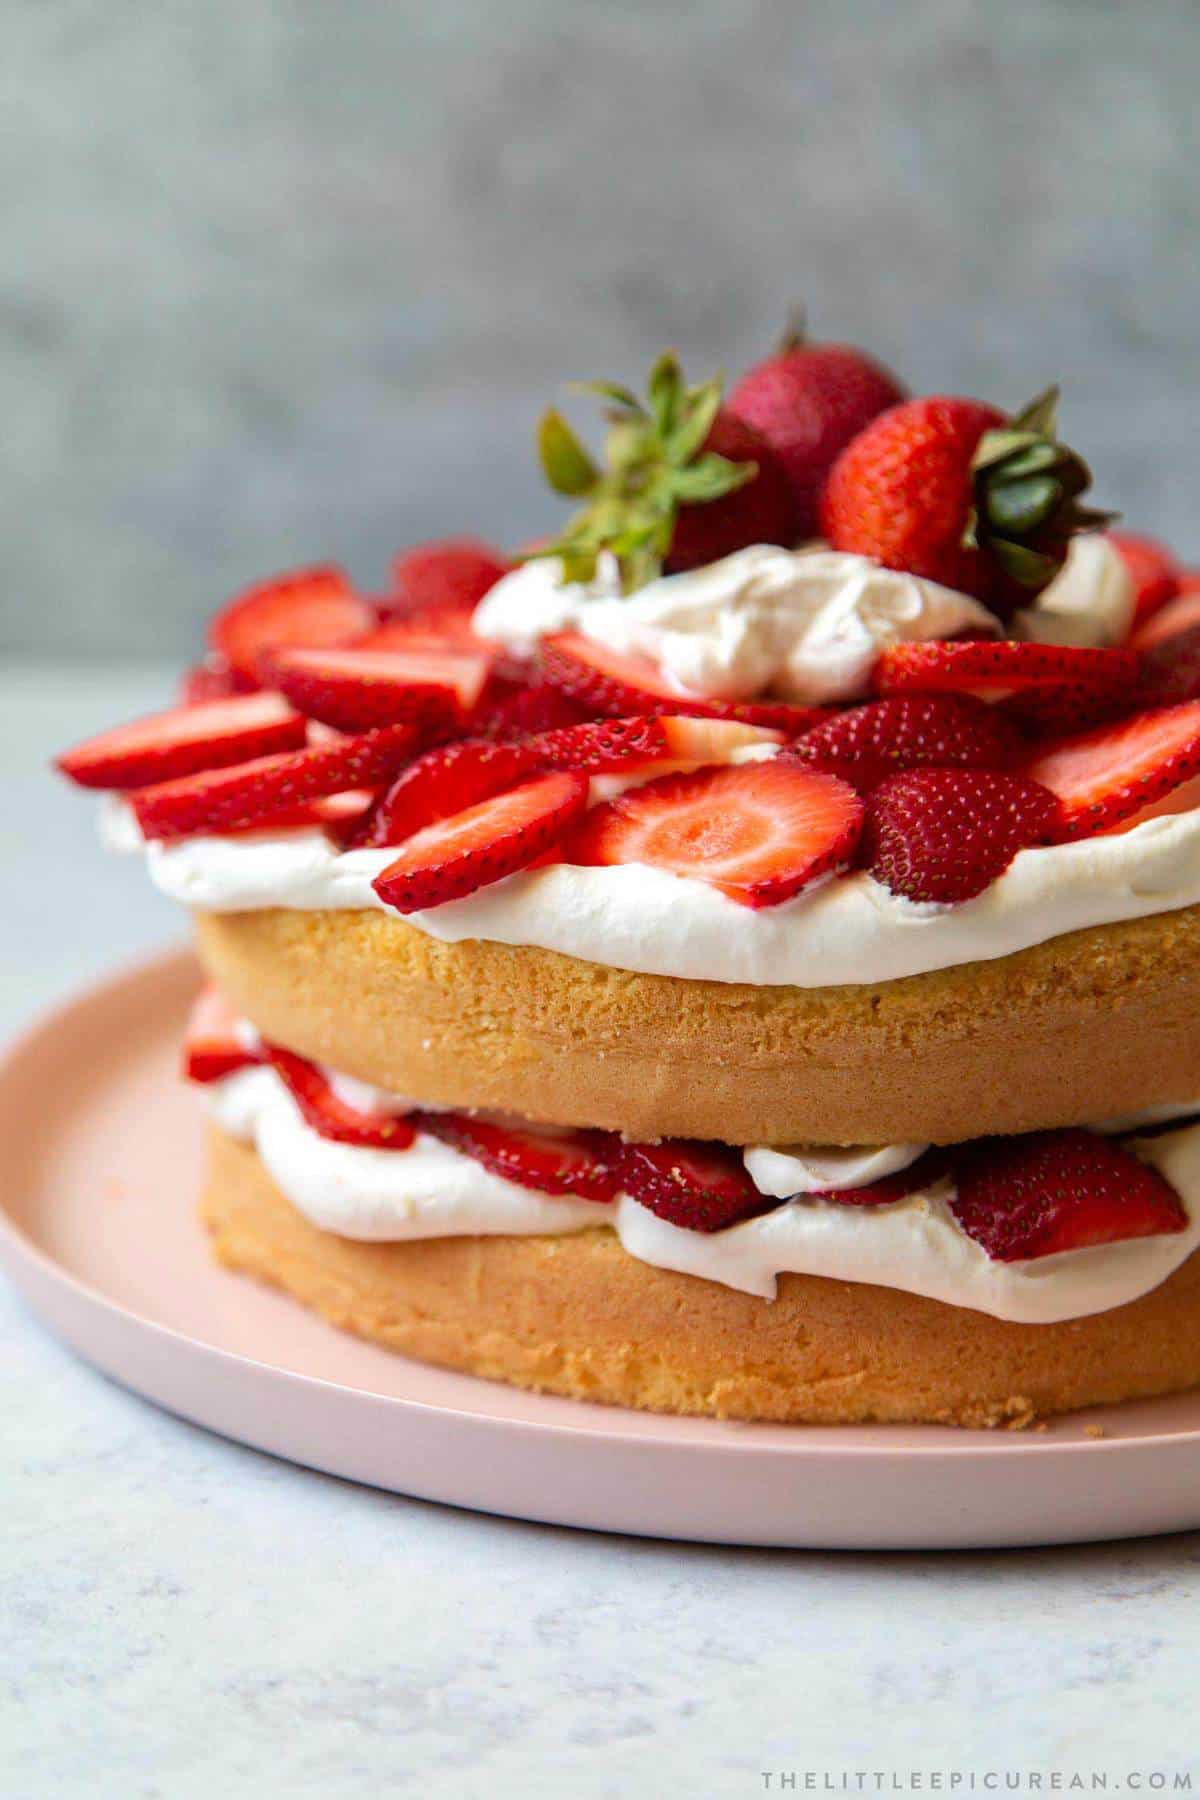 sponge cake with whipped cream and fresh strawberries.